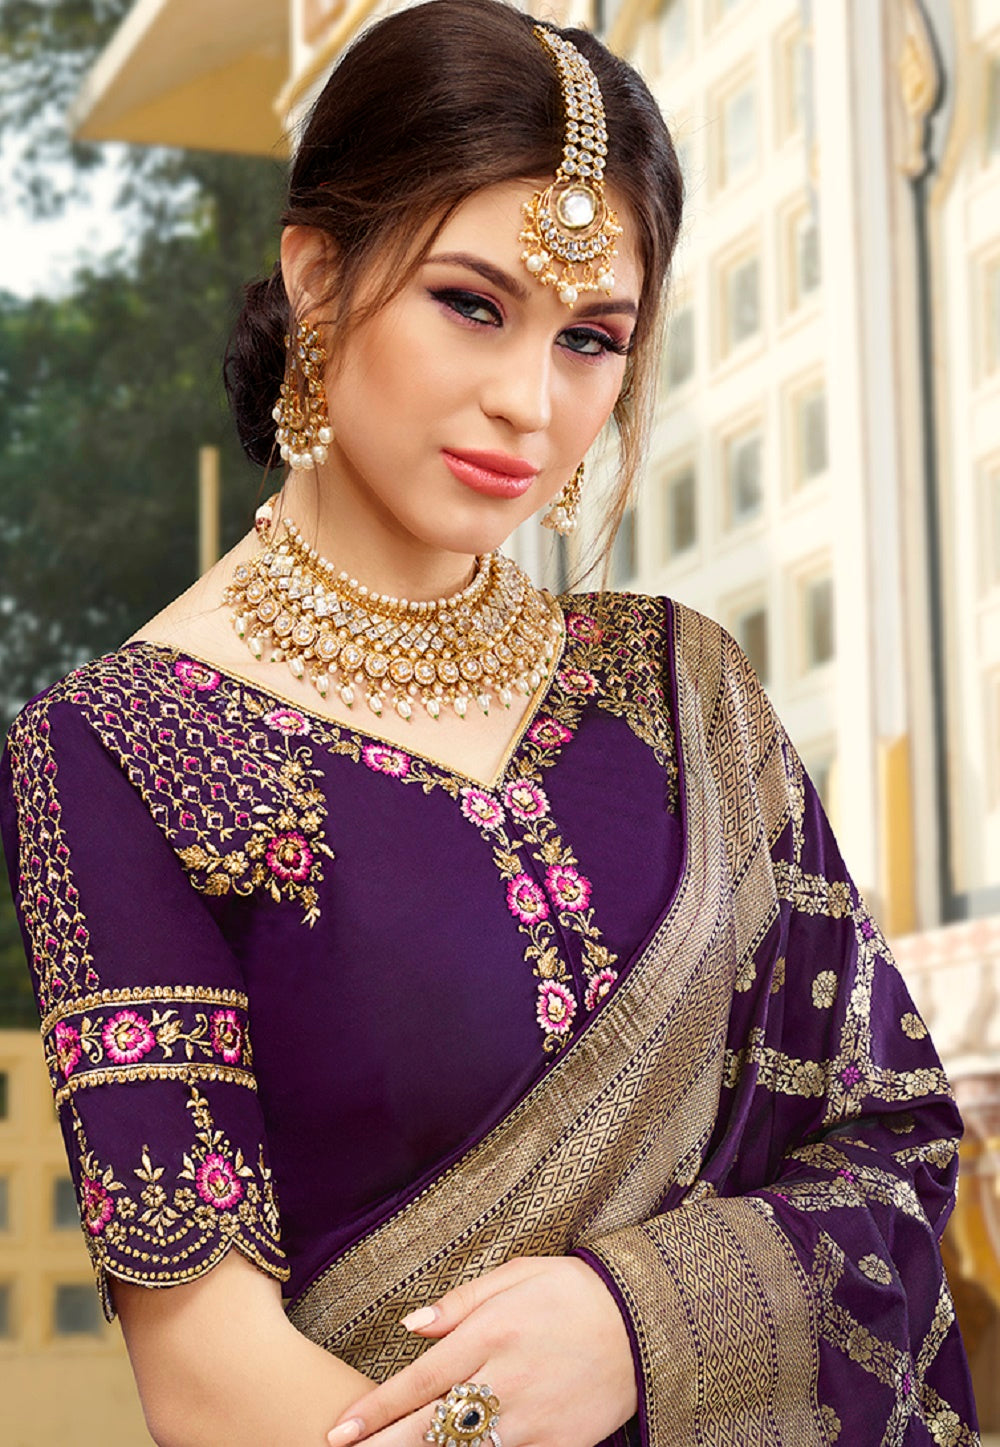 Woven Art Silk Saree in Purple